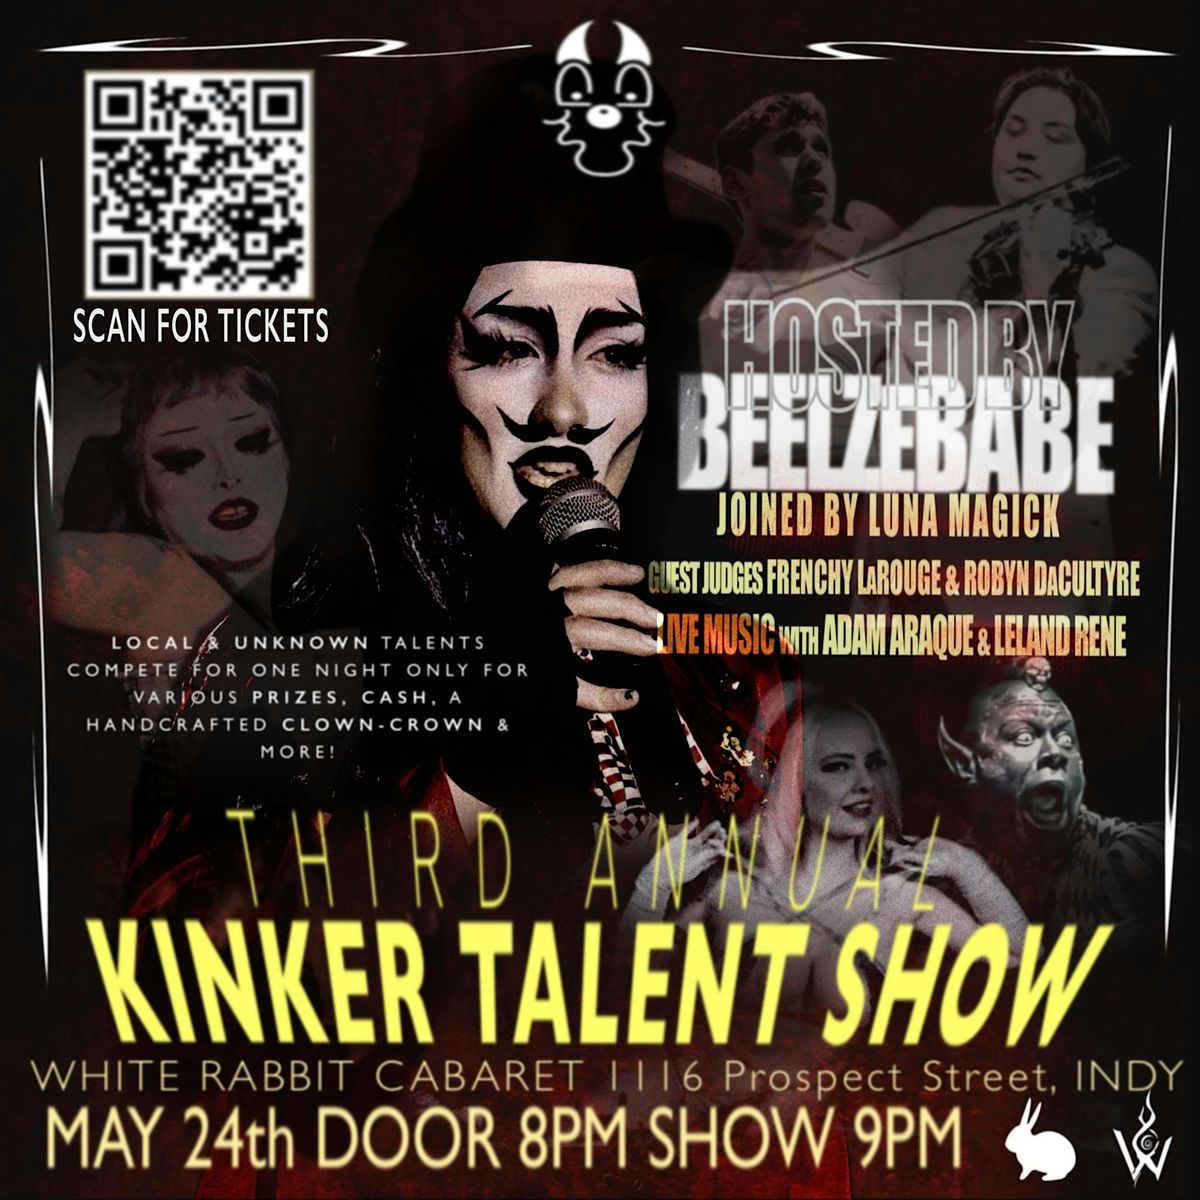 Beelzebabe presents KINKER TALENT SHOW